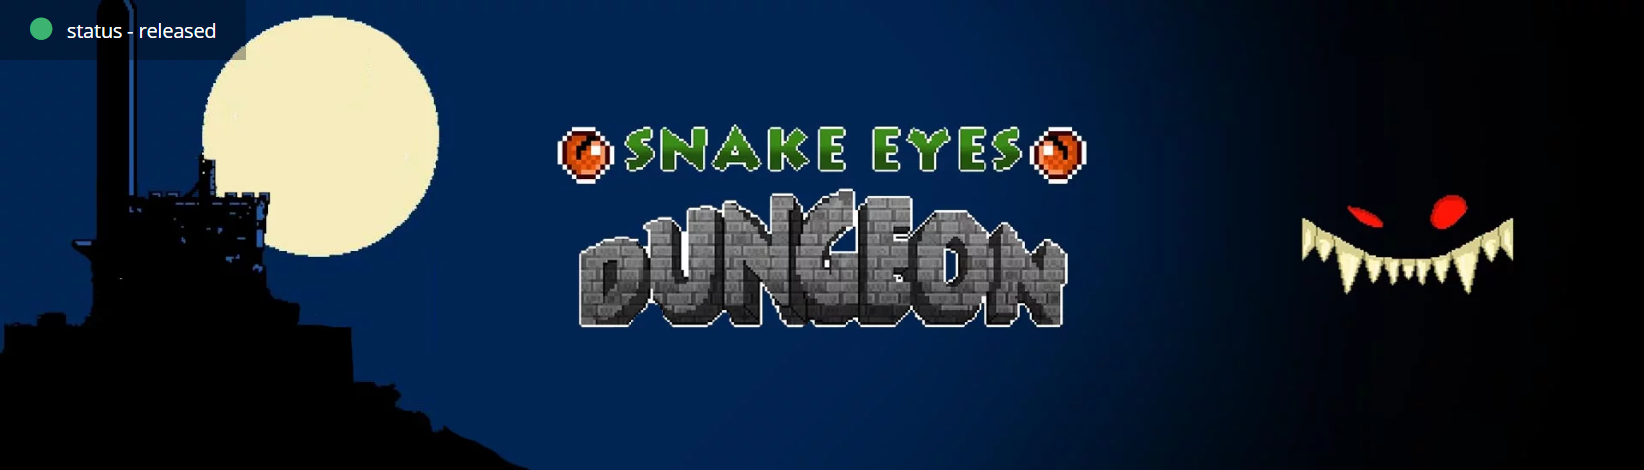 Screenshot_2019-08-28 Snake Eyes Dungeon Indiegala Developers.png